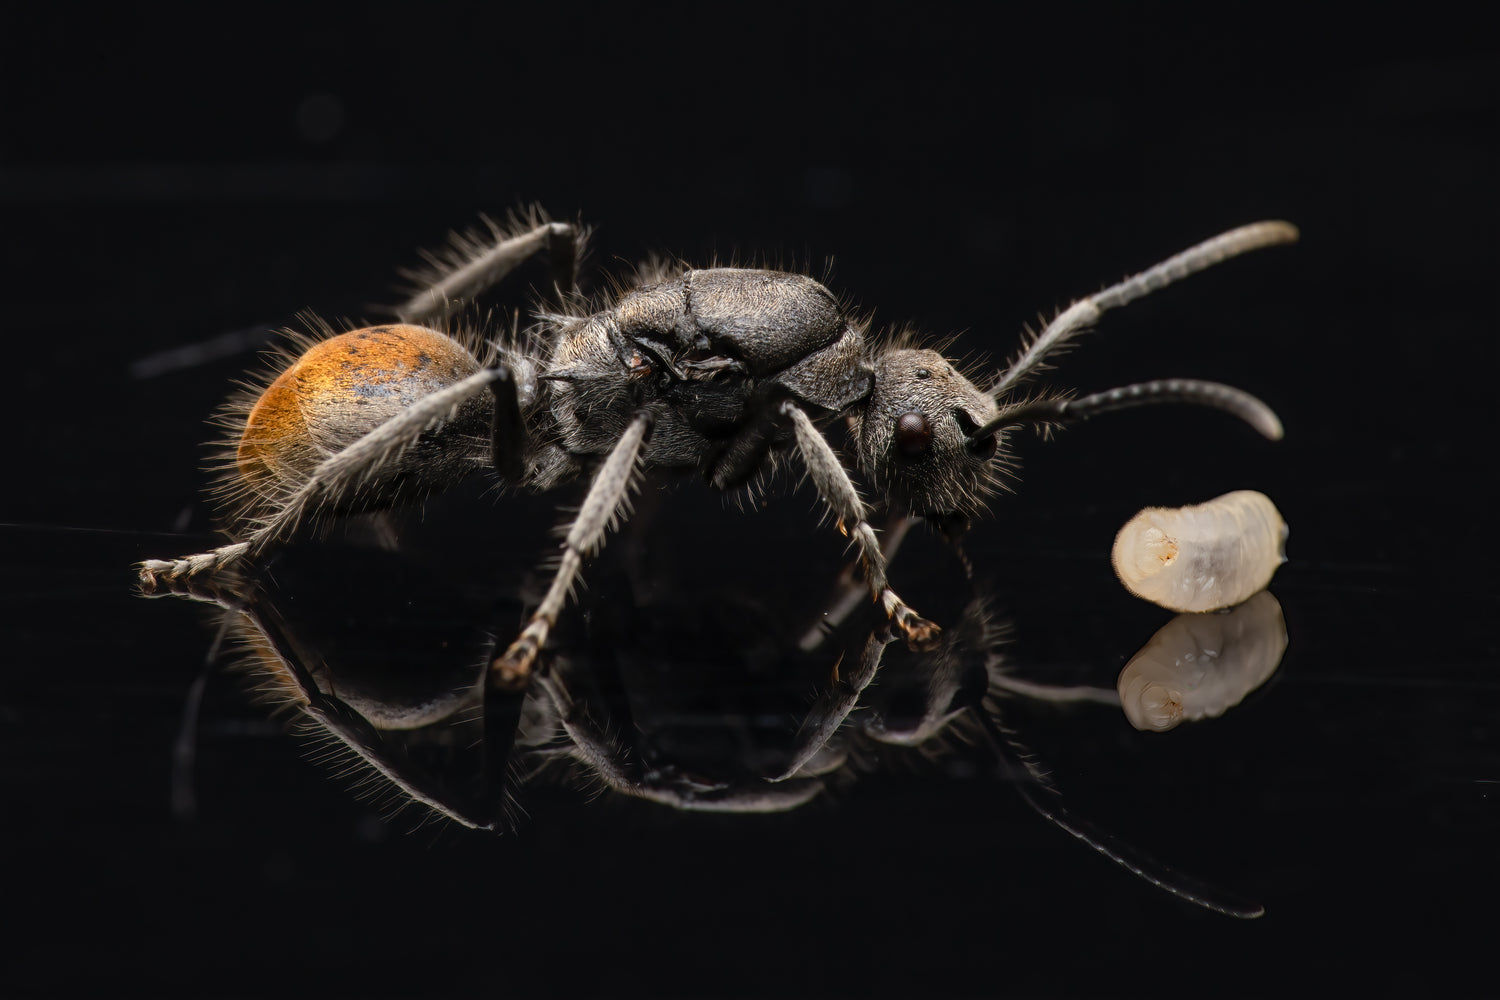 The Astonishing Lifespan of Ant Farms